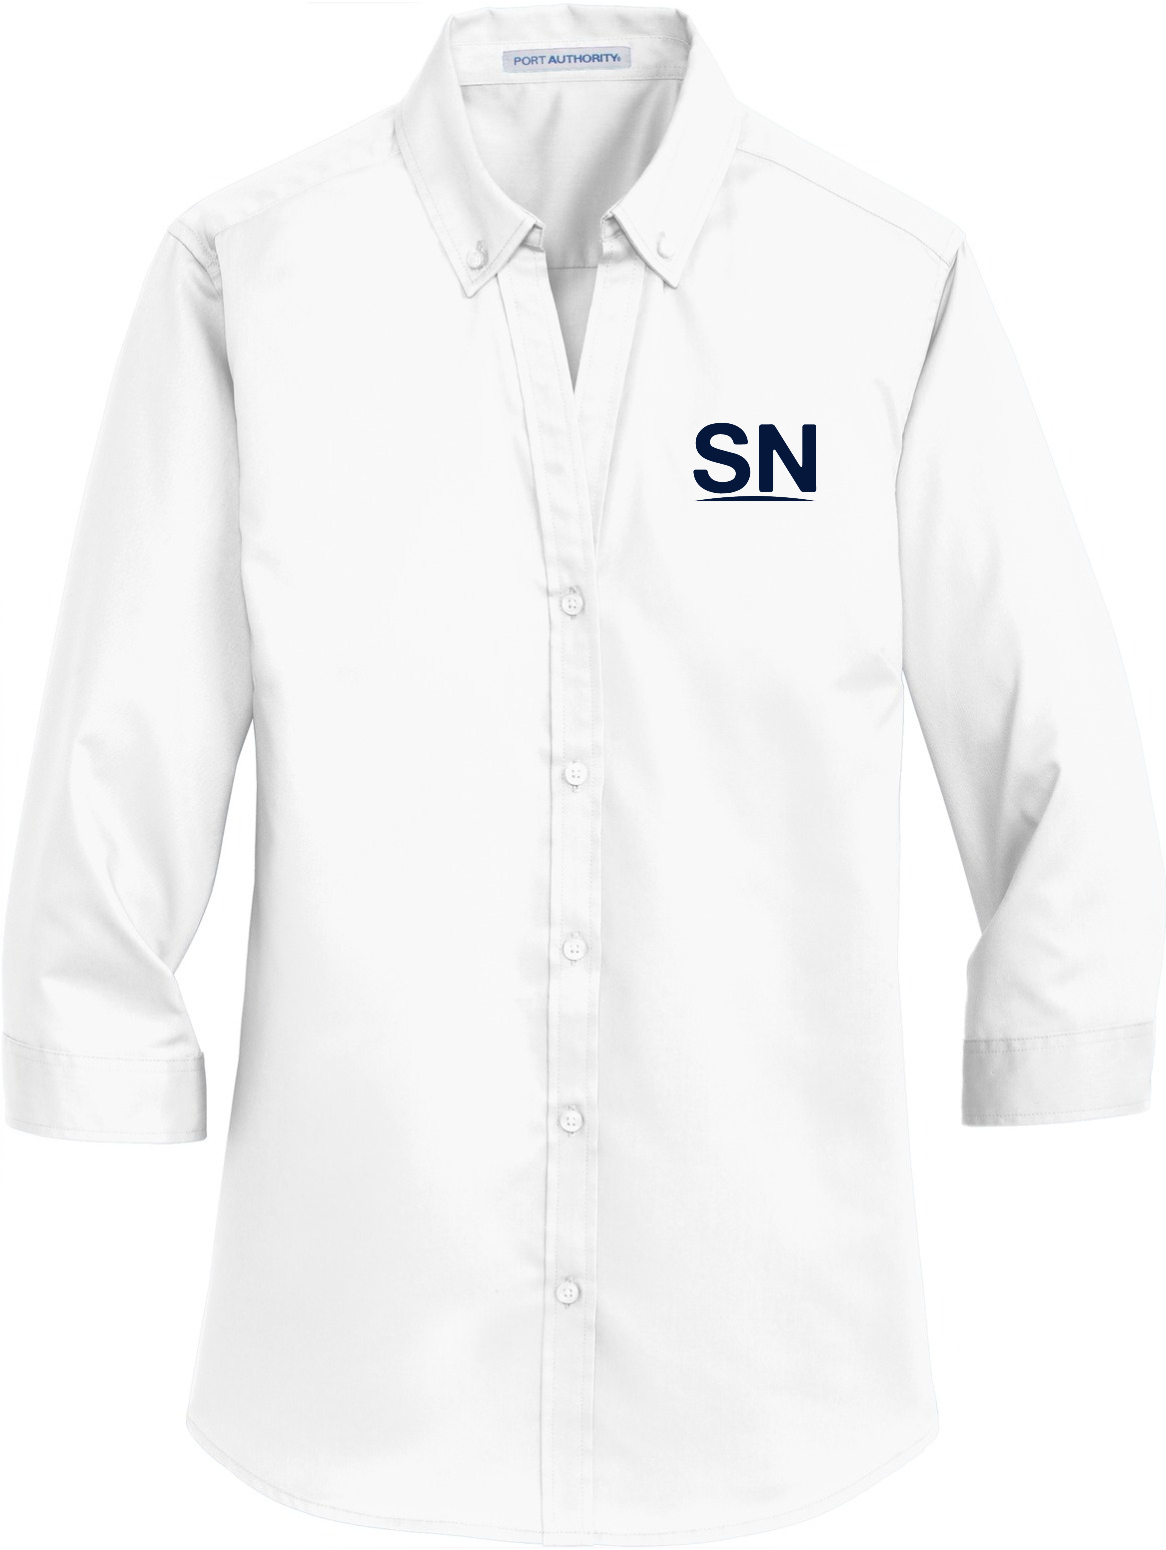 Stambaugh Ness Standard Ladies 3/4-Sleeve Button Up